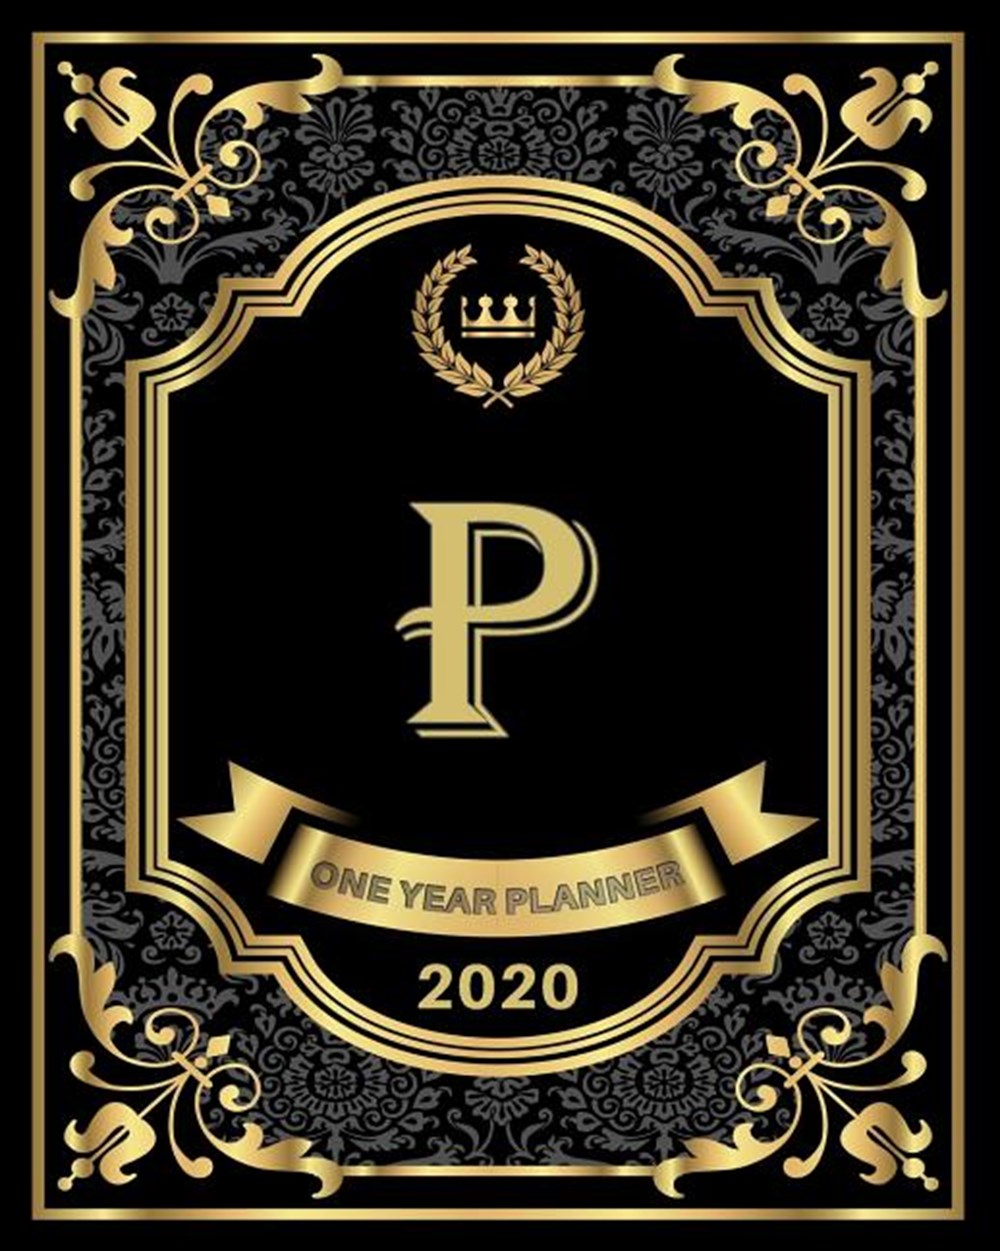 P - 2020 One Year Planner Elegant Black and Gold Monogram Initials - Pretty Calendar Organizer - One